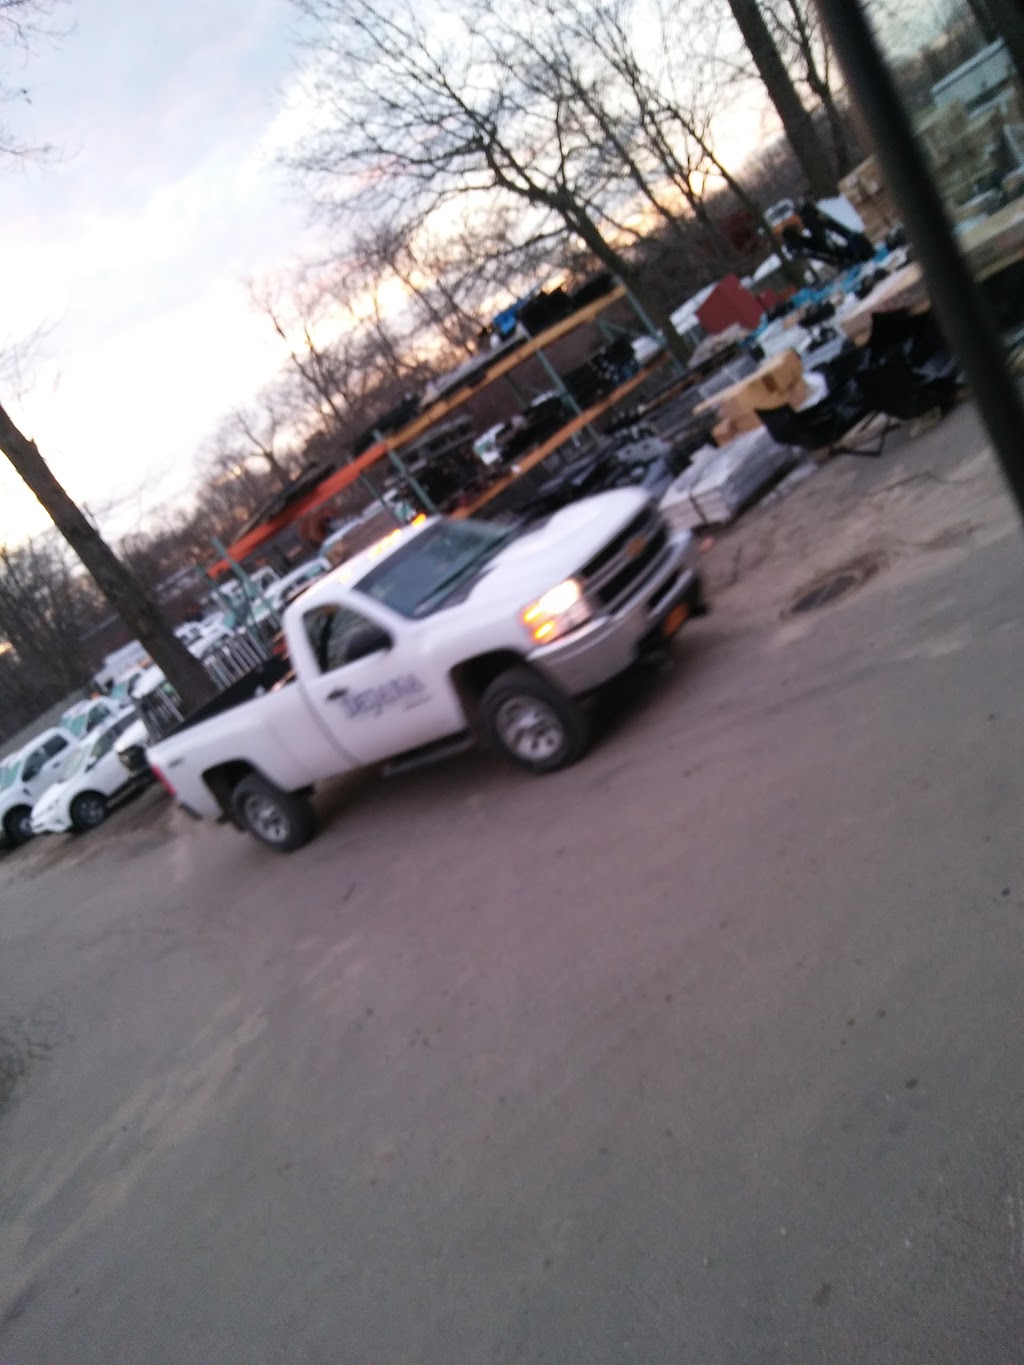 Dejana Truck & Utility Equipment Co | 490 Pulaski Rd, Kings Park, NY 11754 | Phone: (631) 544-9000